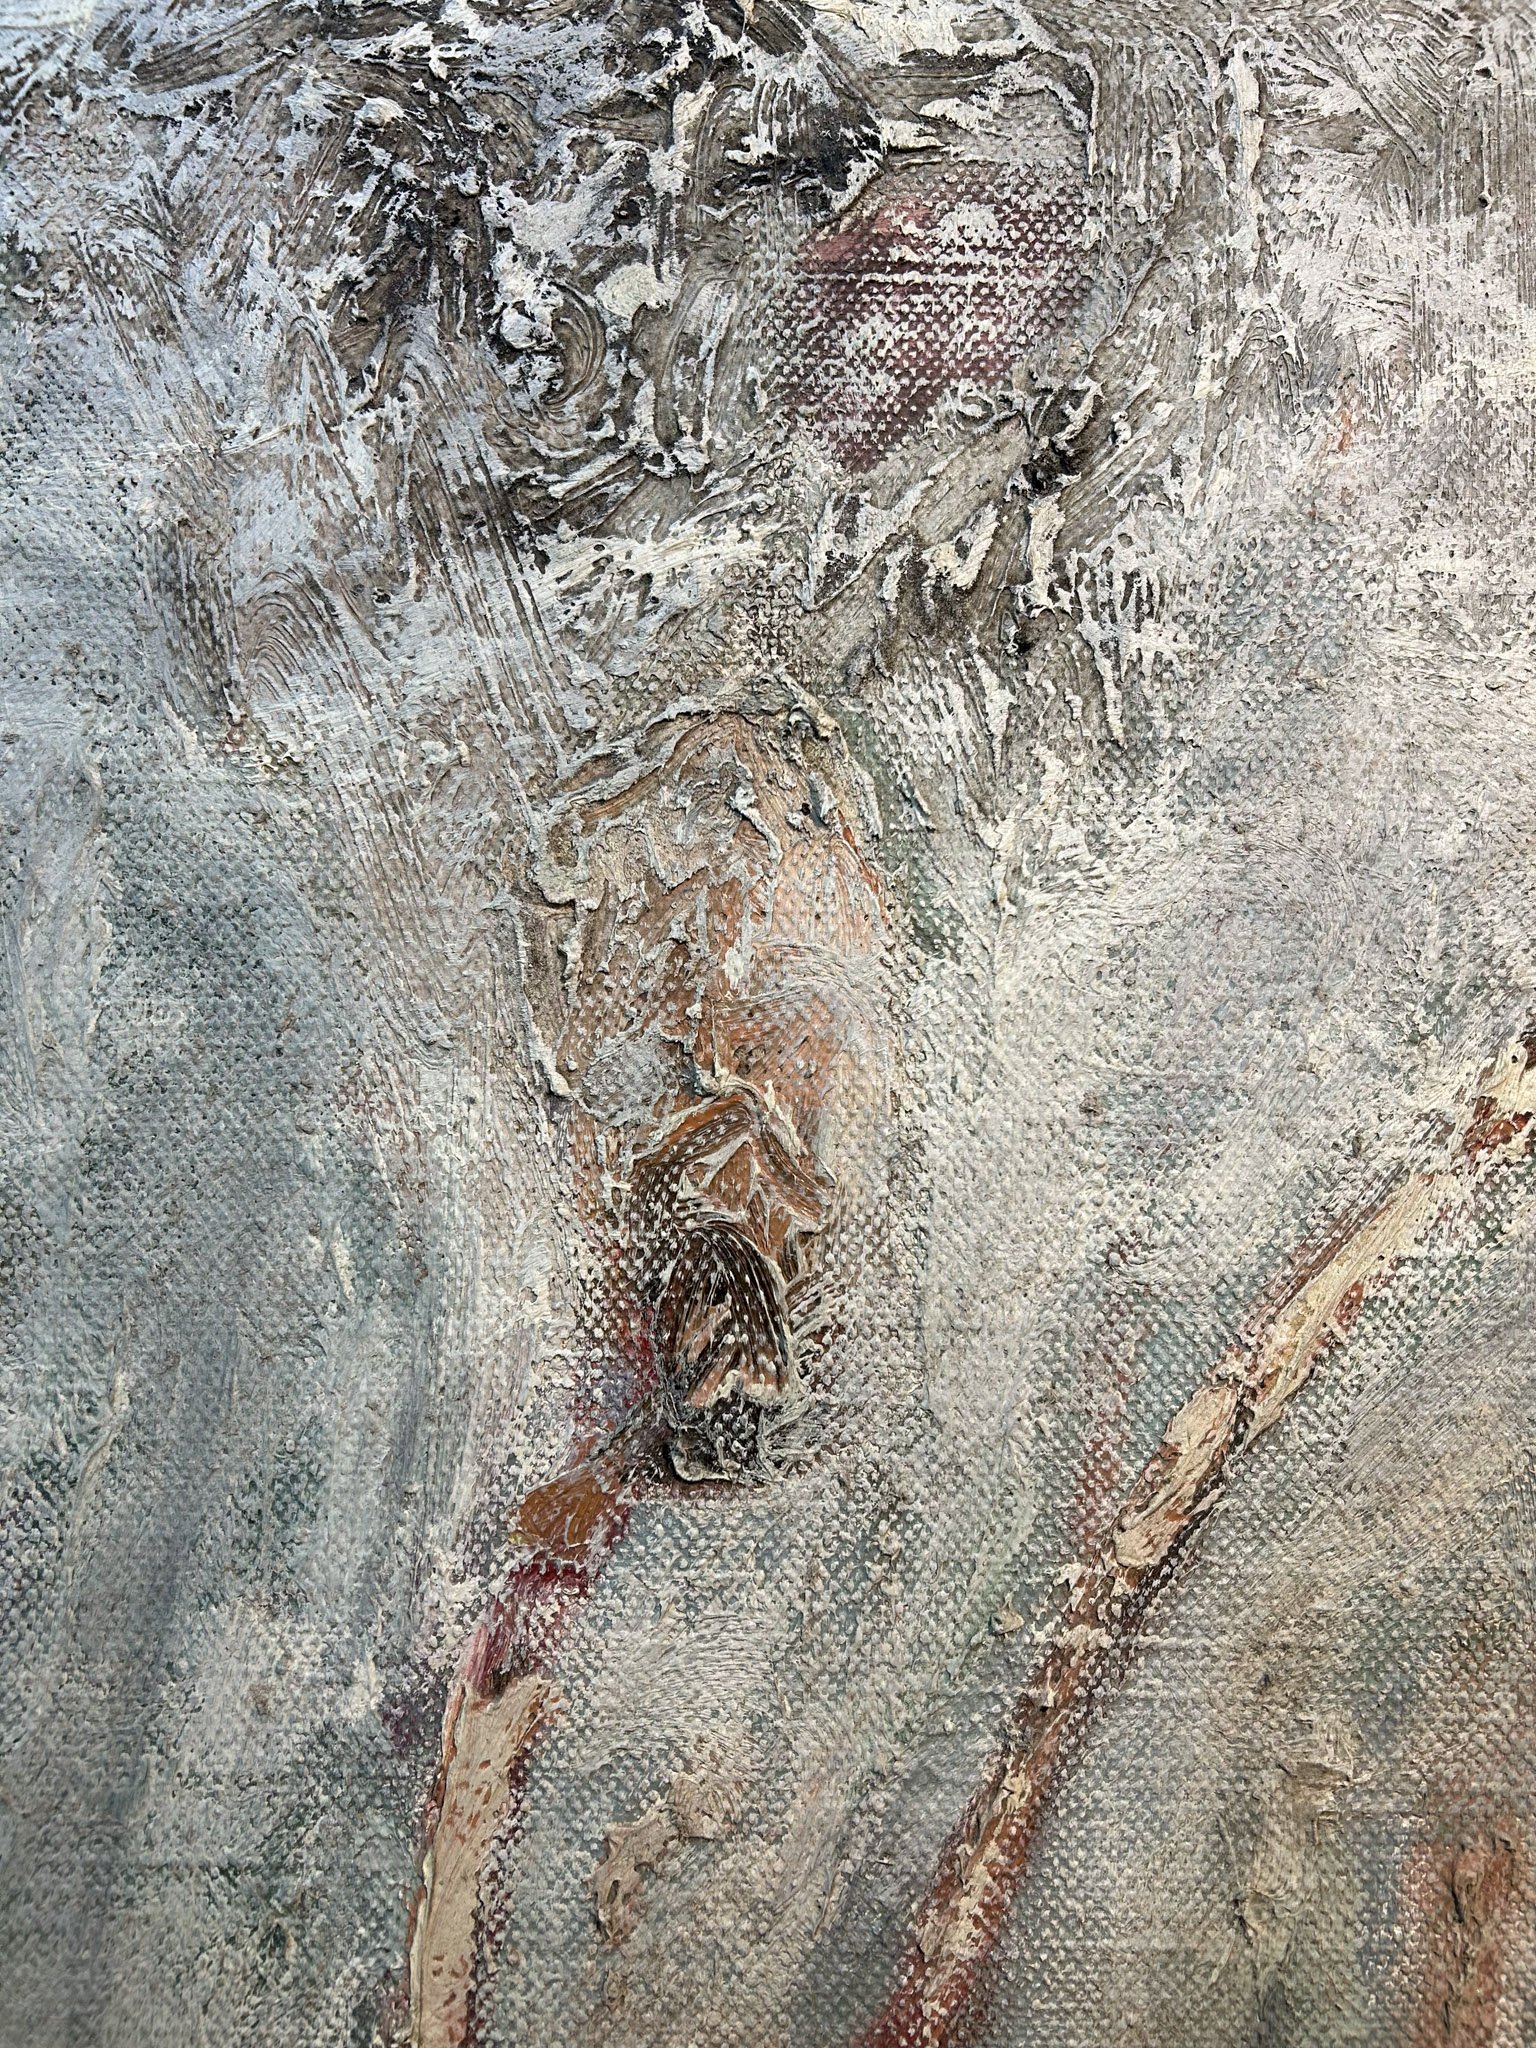 Spore (detail)